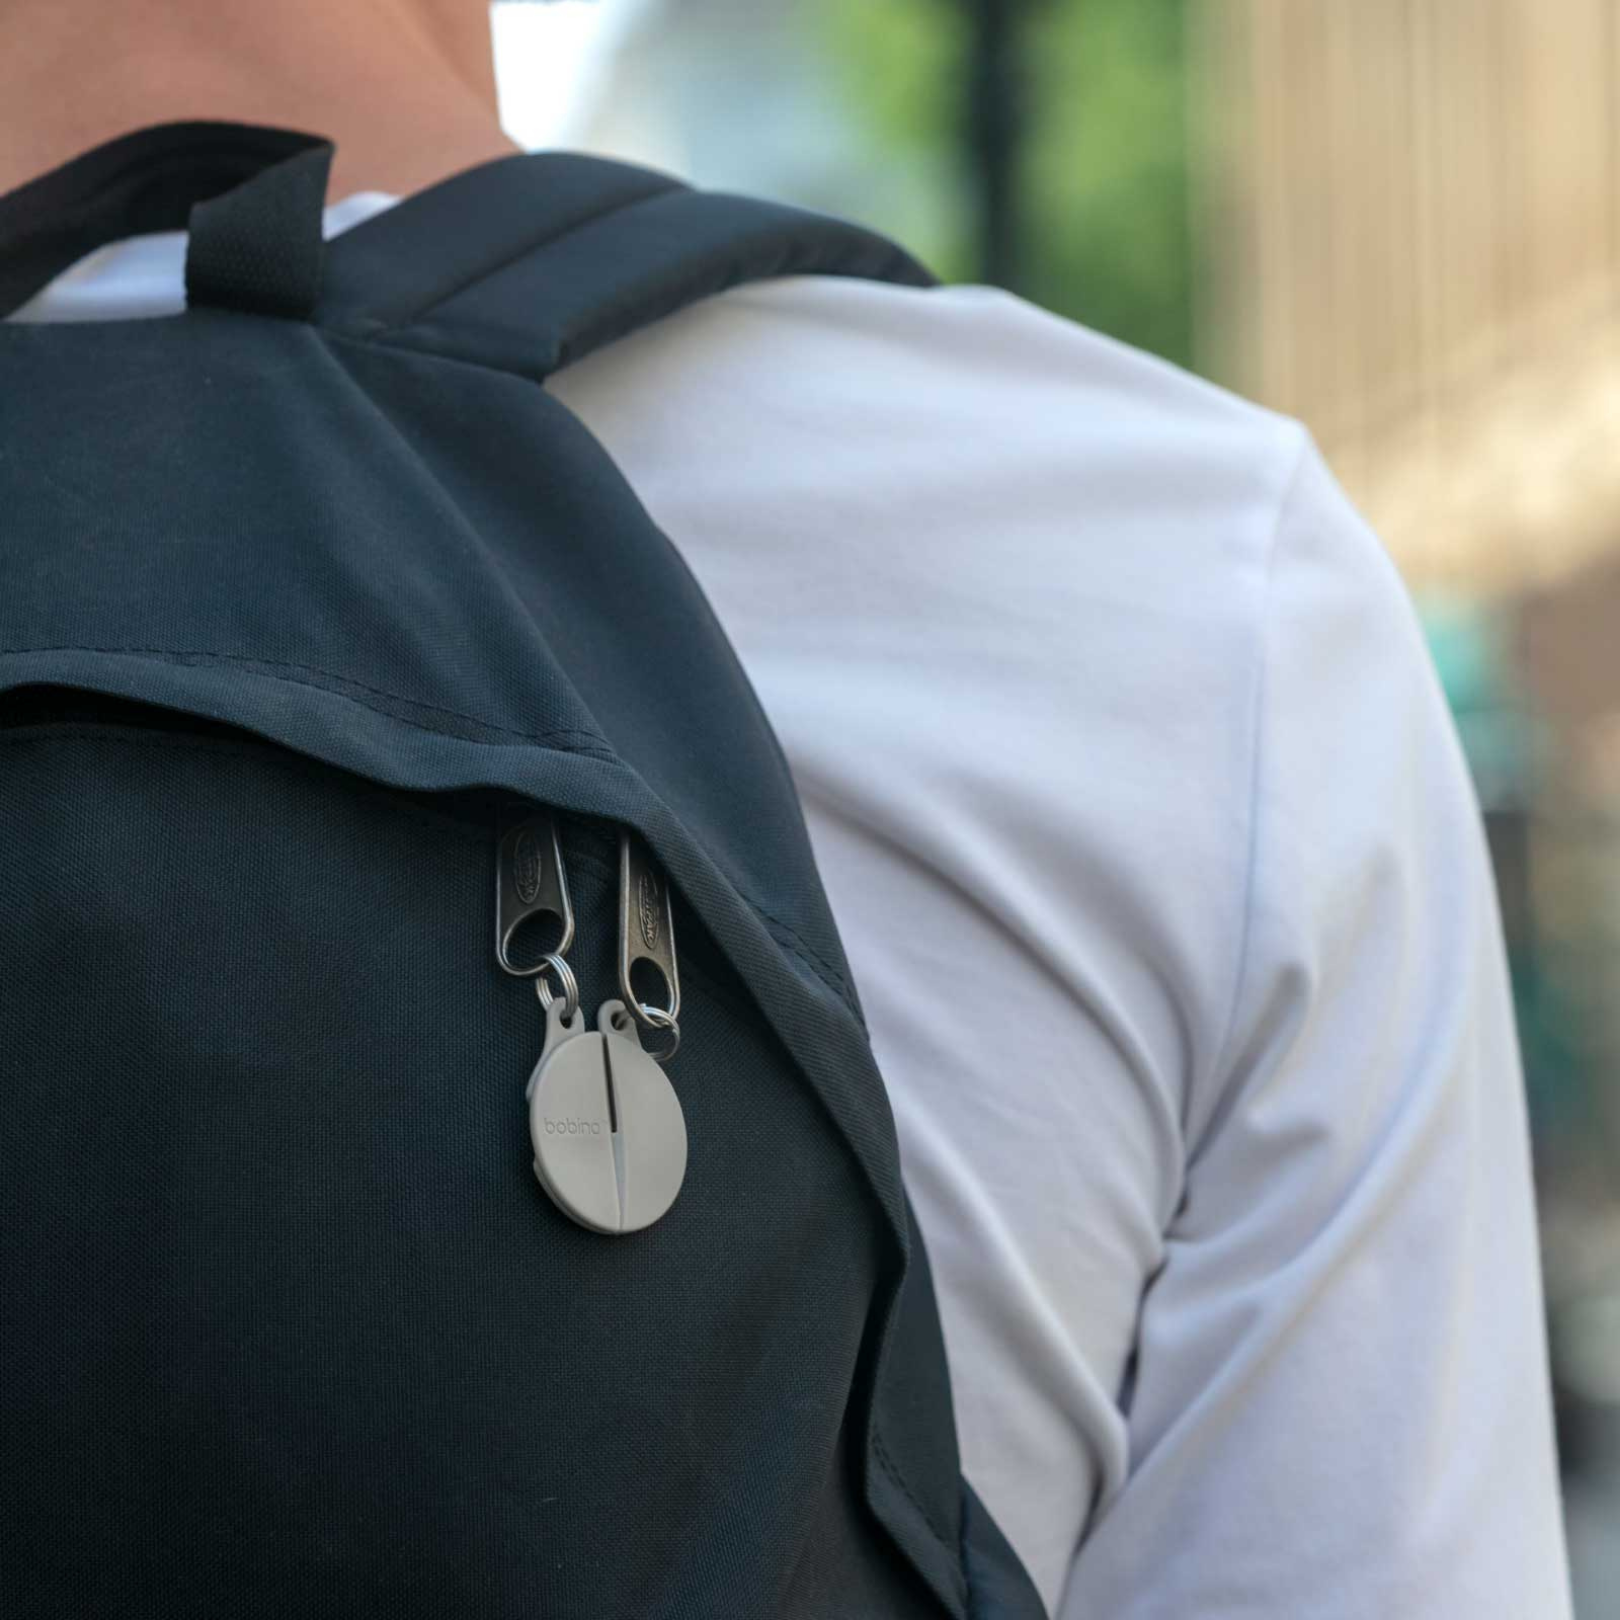 Zipper Clip 2-Pack ~ keep your belongings protected